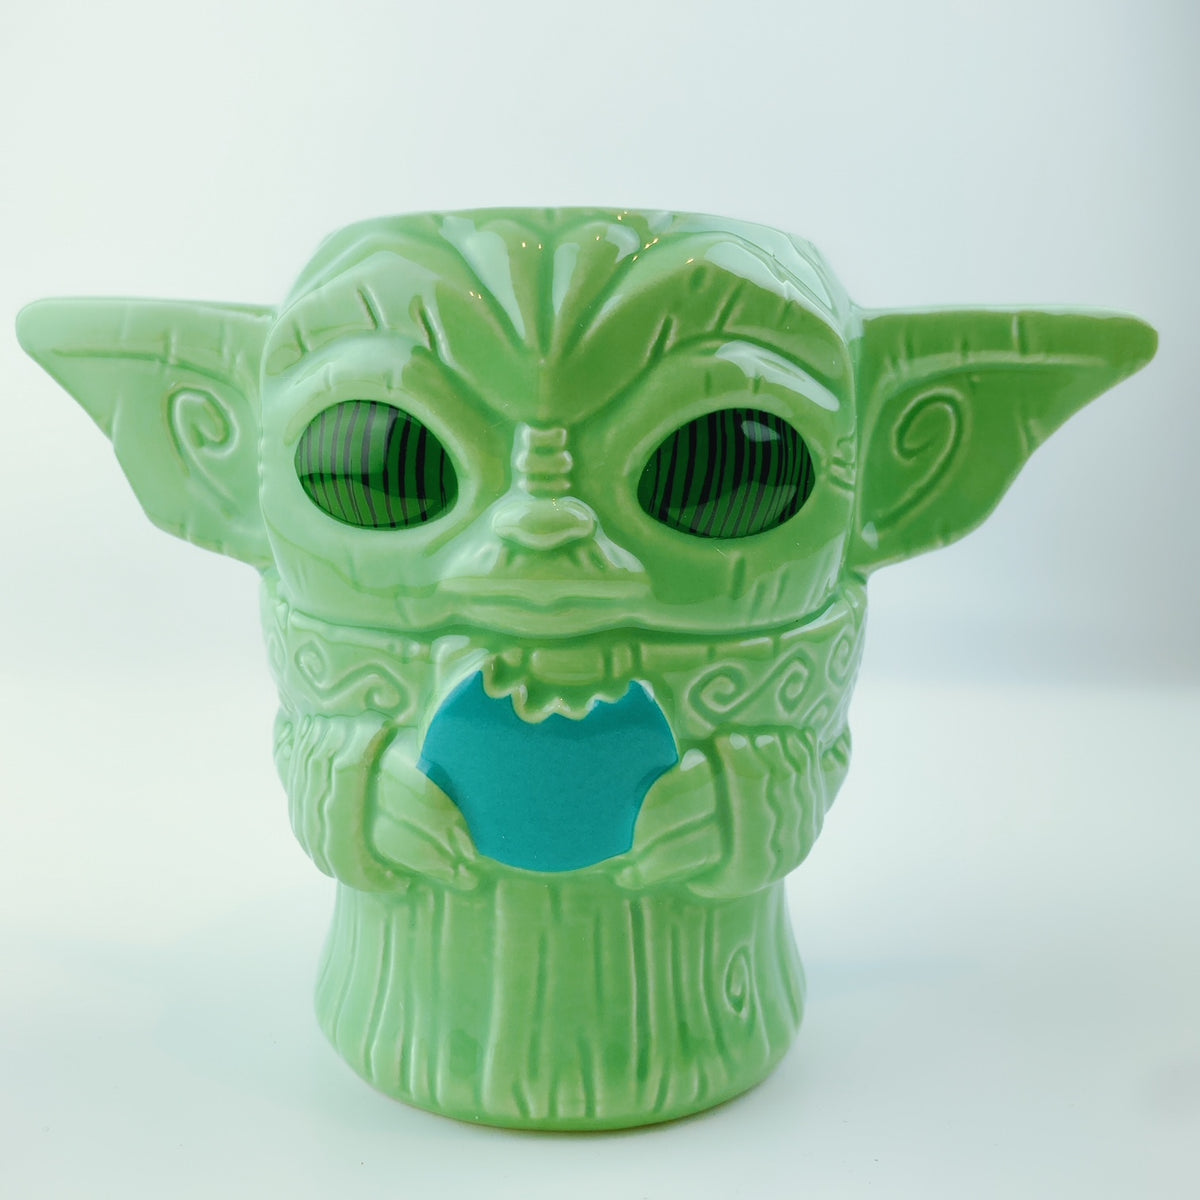 Geeki Tikis Star Wars: The Mandalorian Grogu with Cookie Ceramic Mug | 16  Ounces